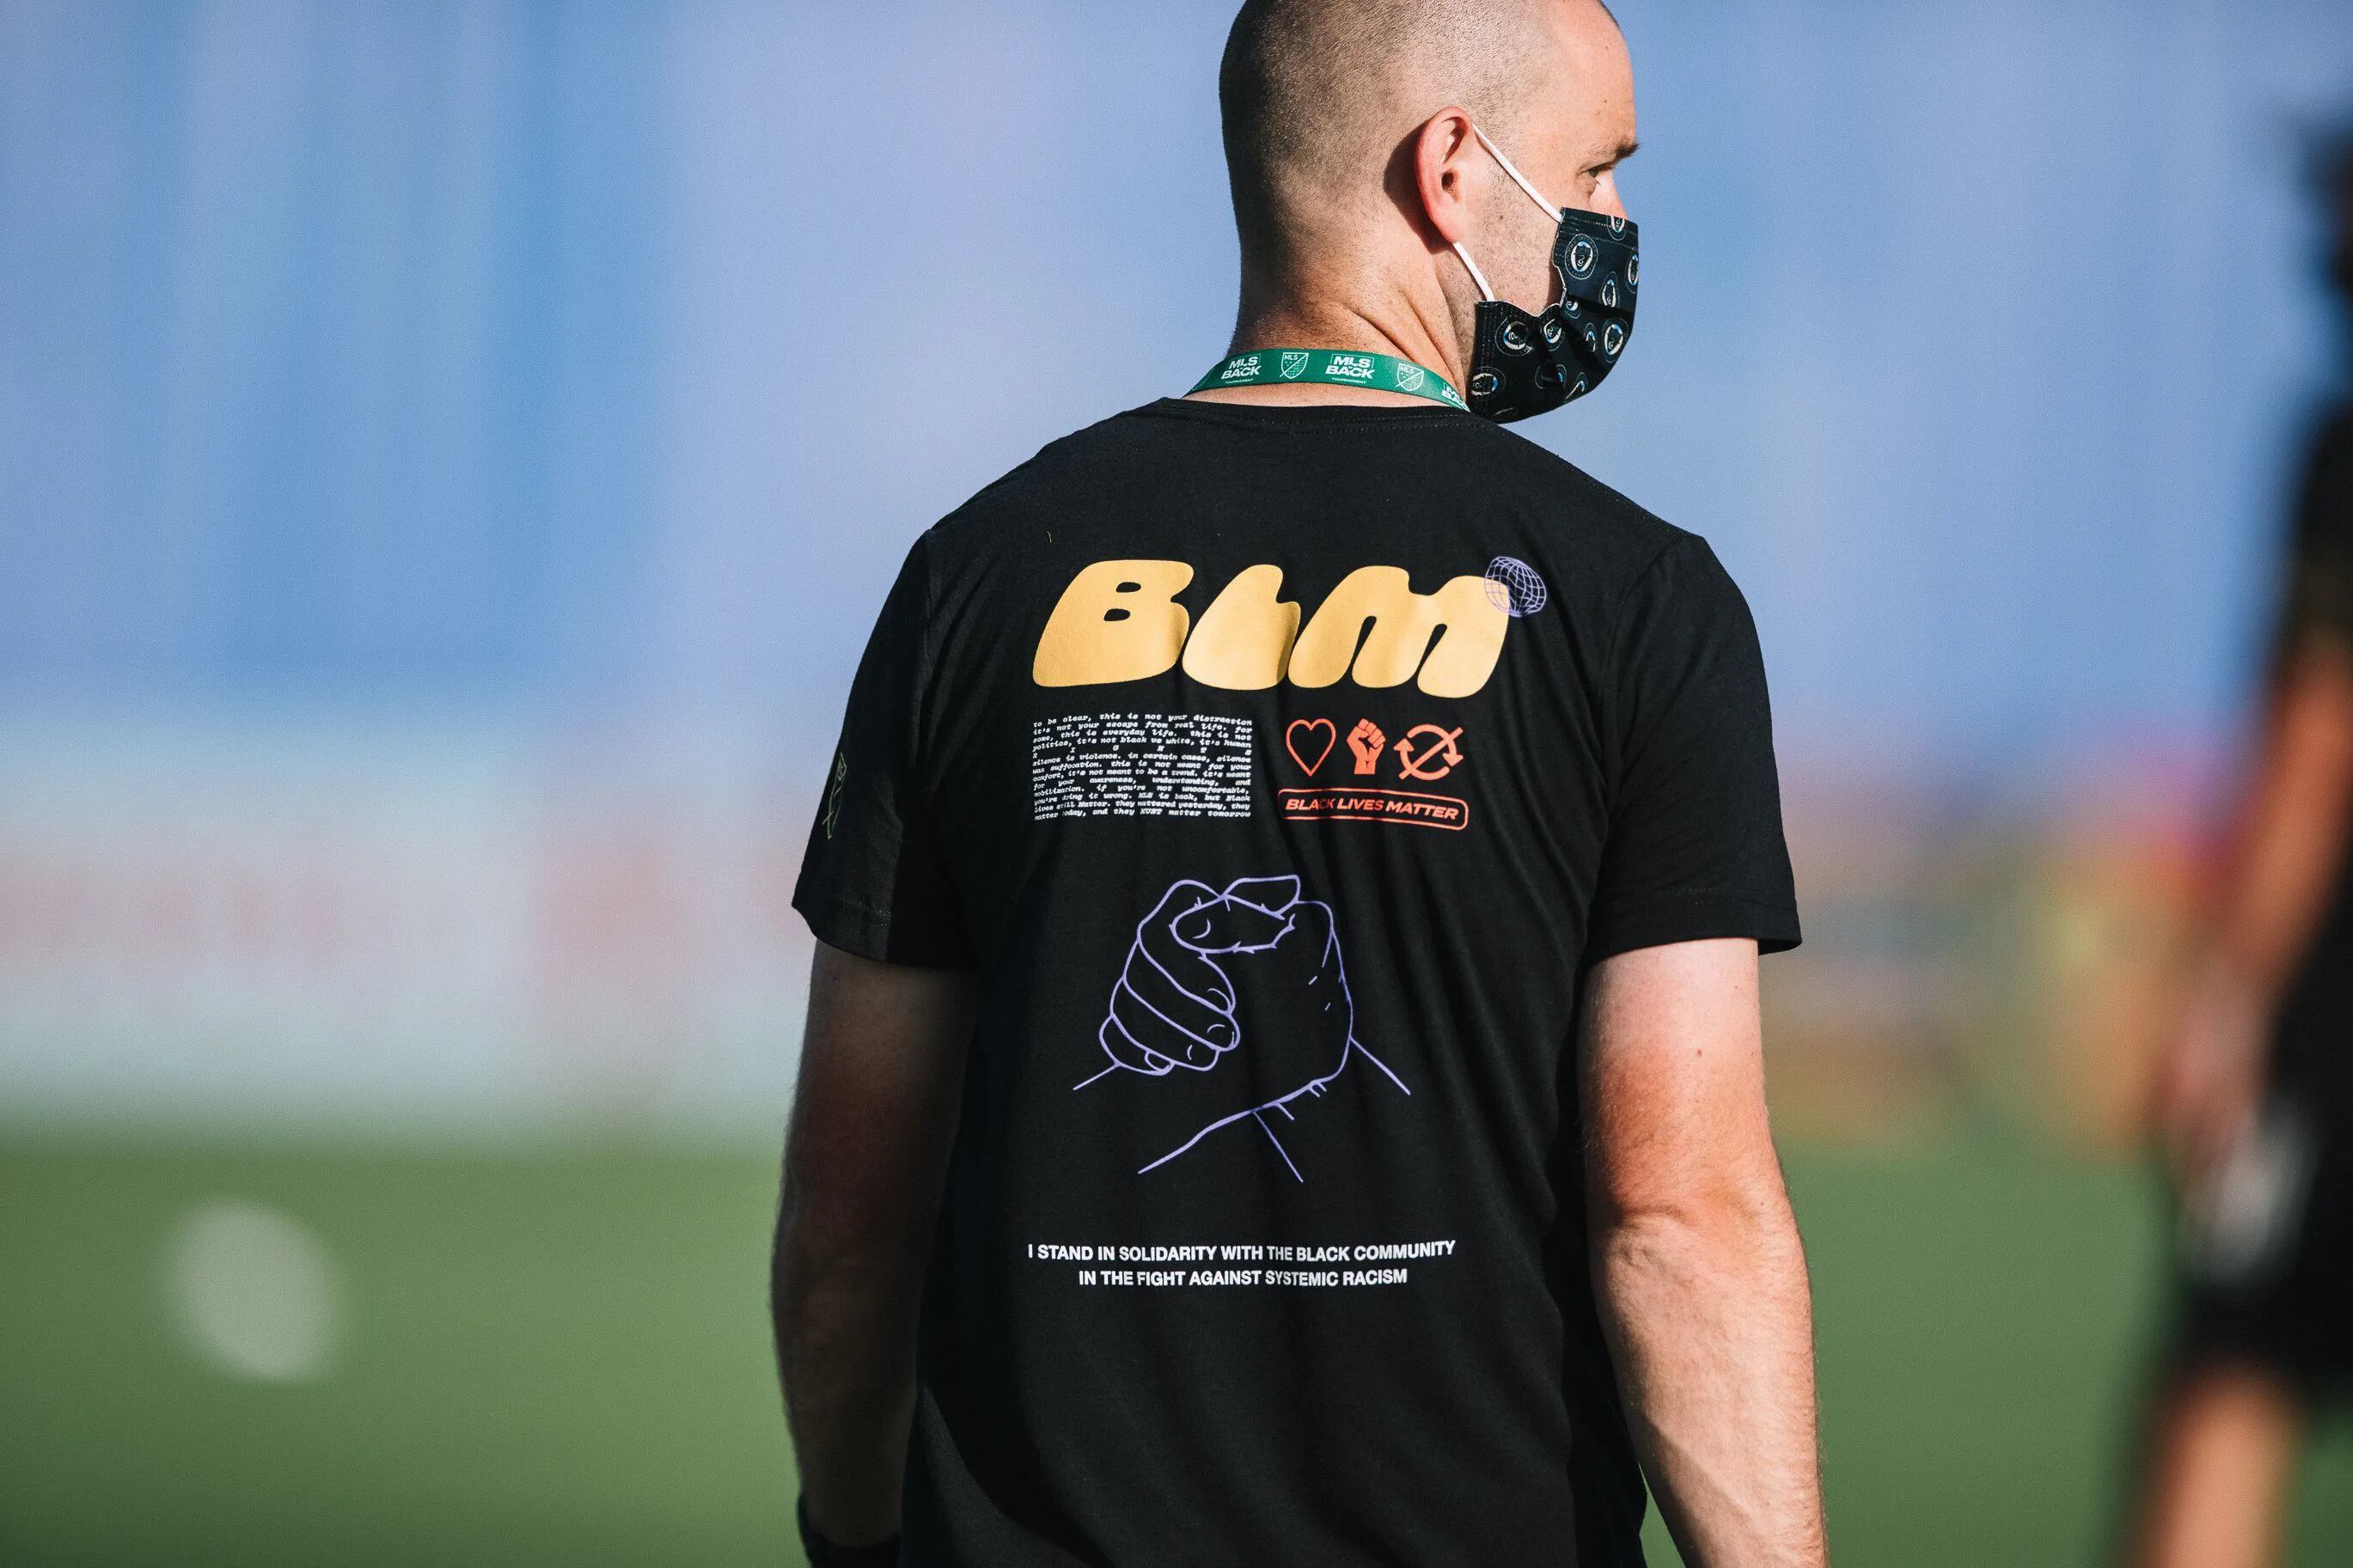 San Diego Soccer Team To Wear Black Lives Matter Jerseys